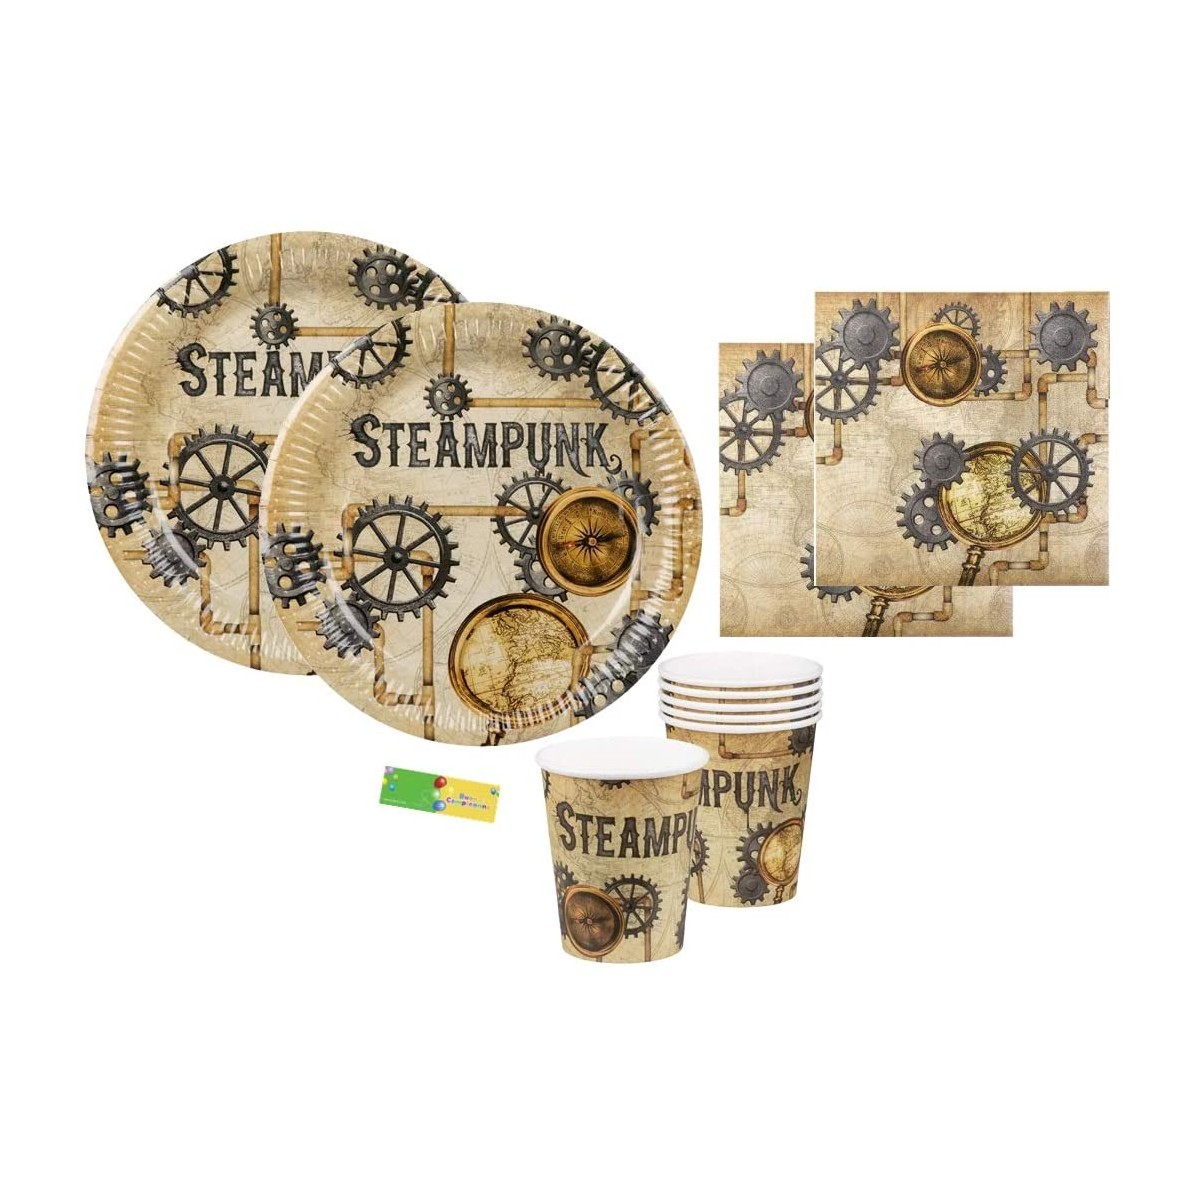 Kit festa per 16 persone tema Steatpunk, ingranaggi meccanici